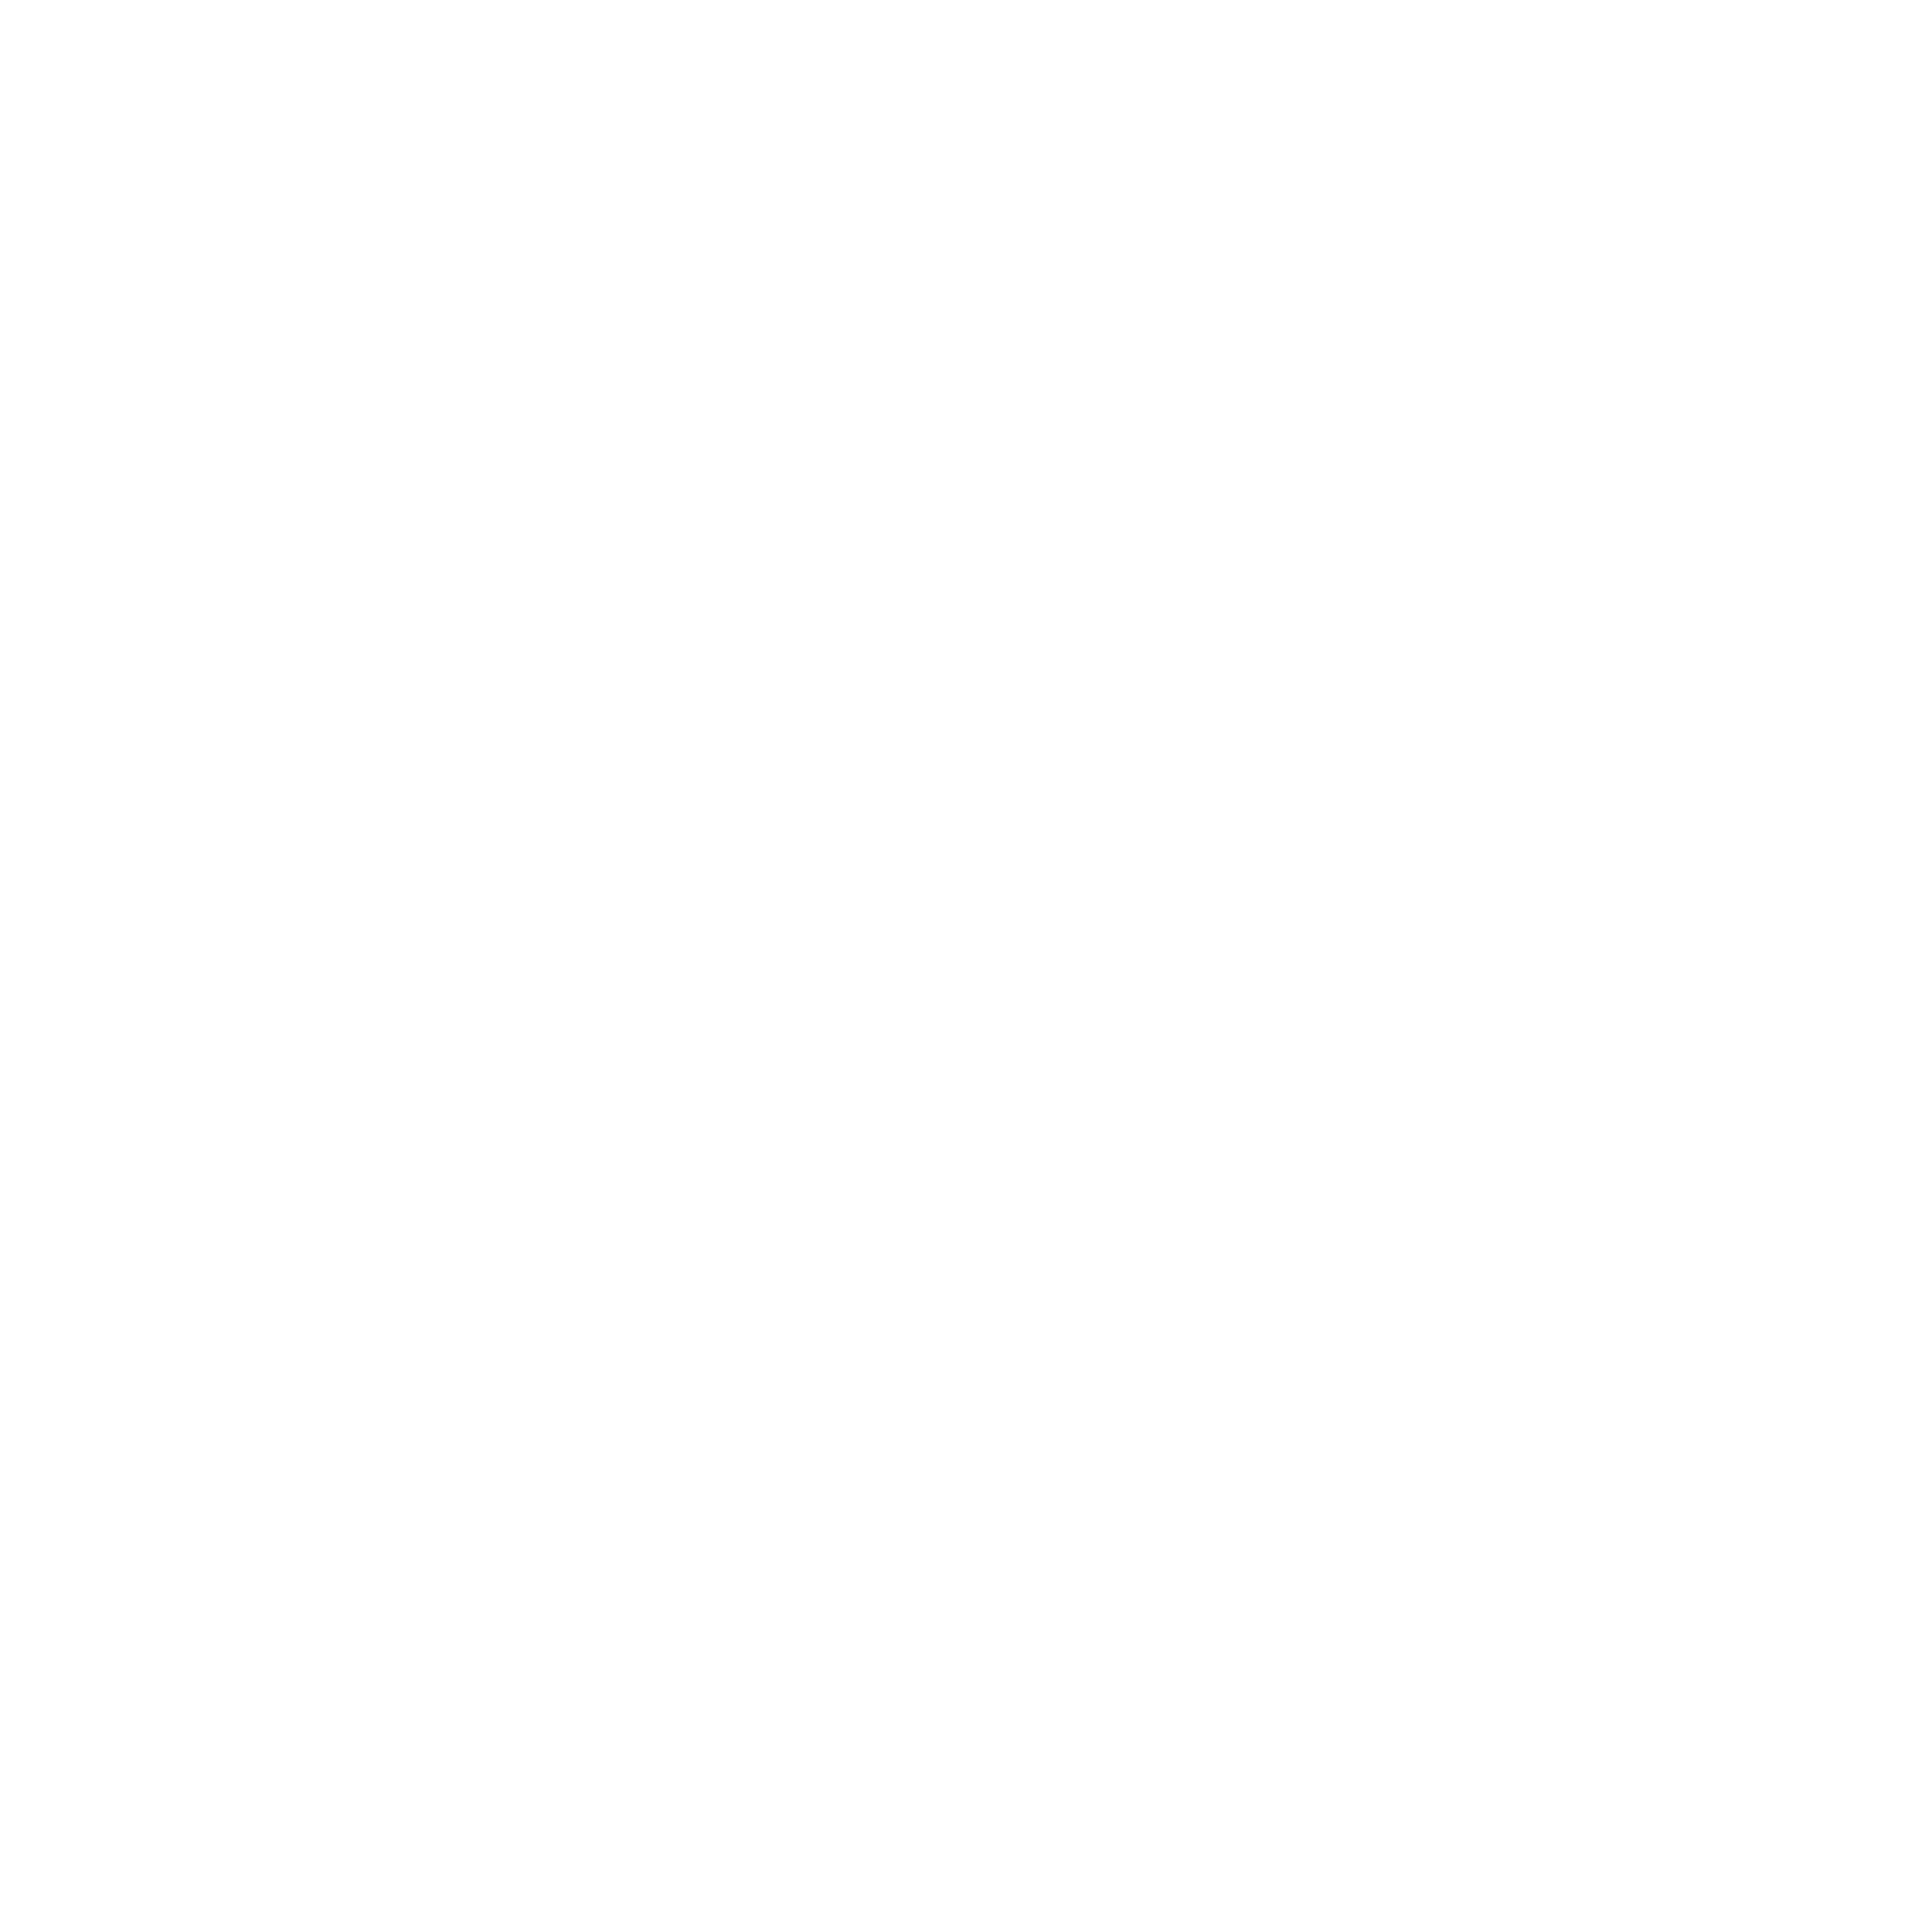 Clopay Mobile Phone Icon White Outline